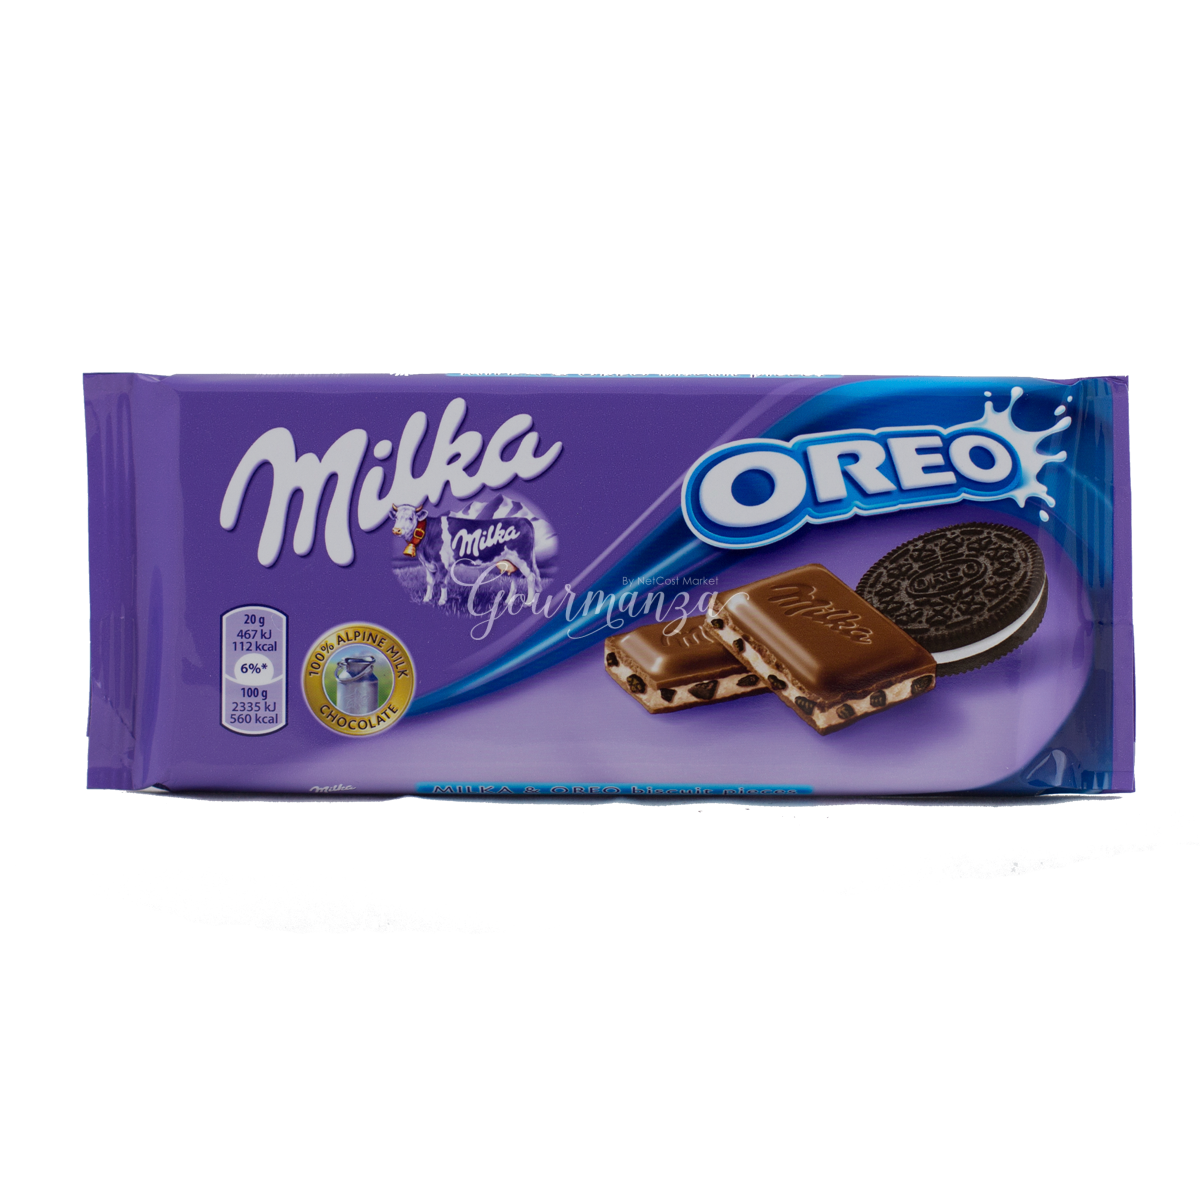 MILKA 100g With Oreo Cookies Chocolate